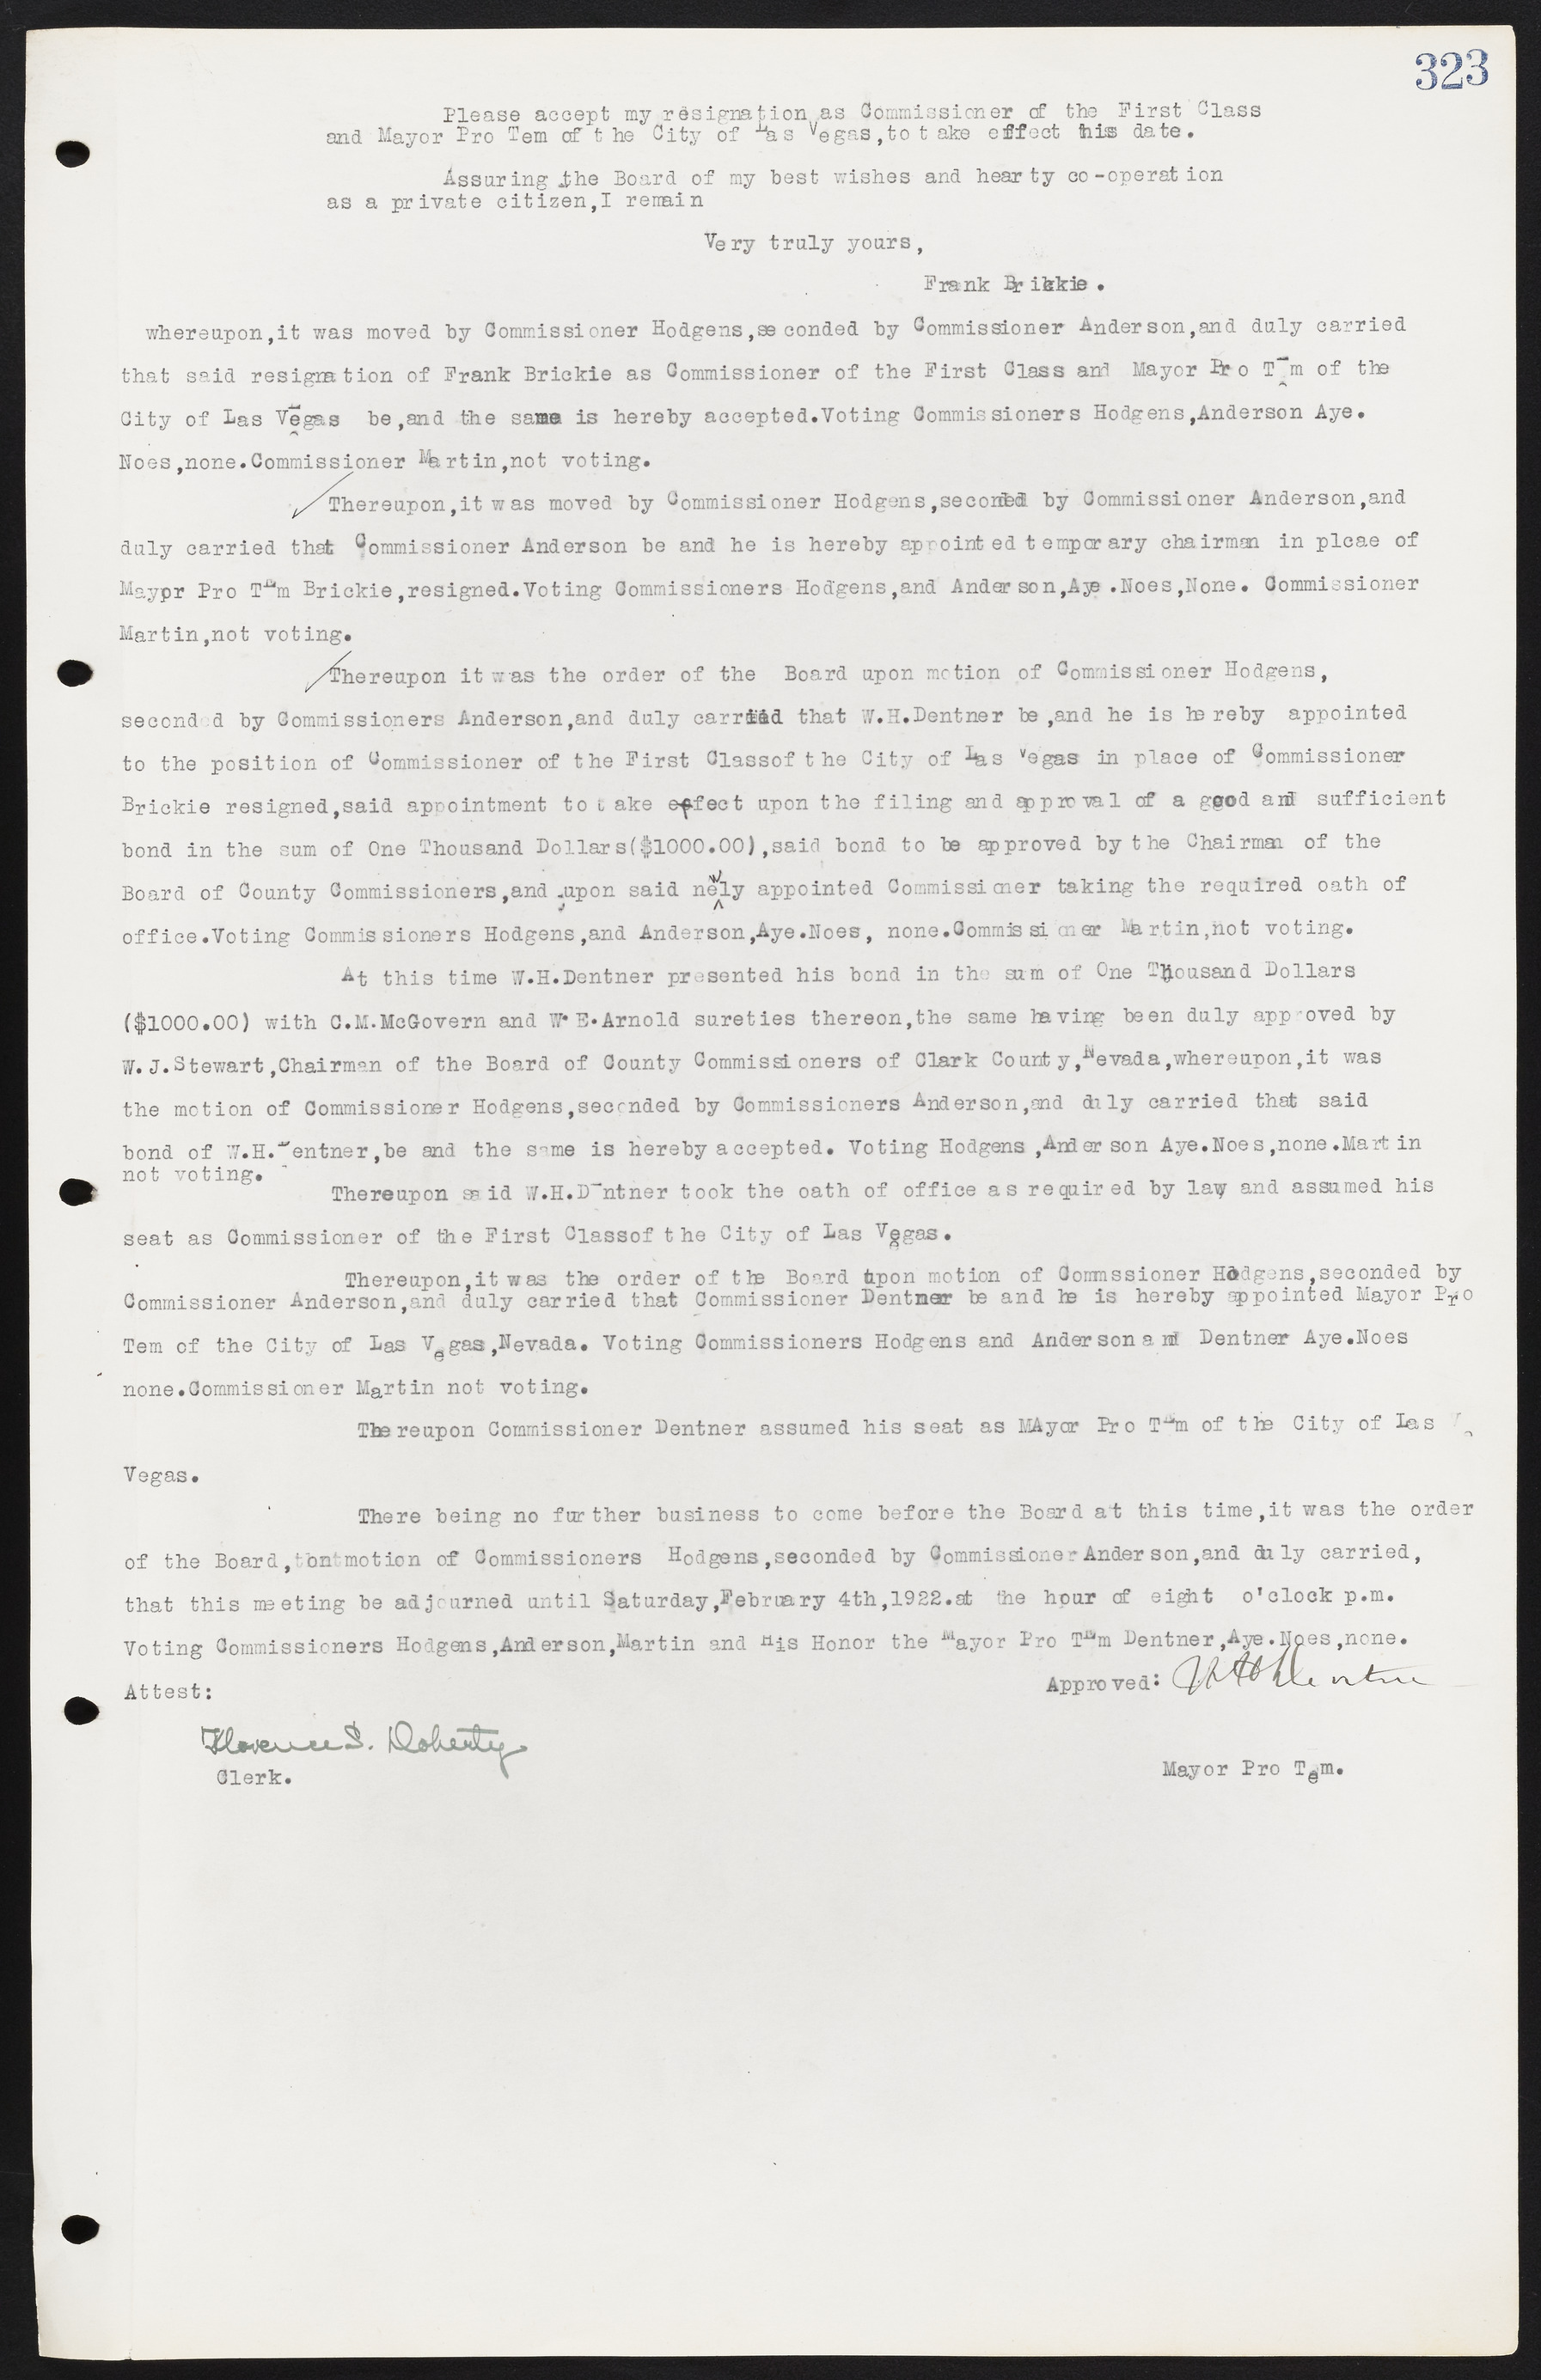 Las Vegas City Commission Minutes, June 22, 1911 to February 7, 1922, lvc000001-339